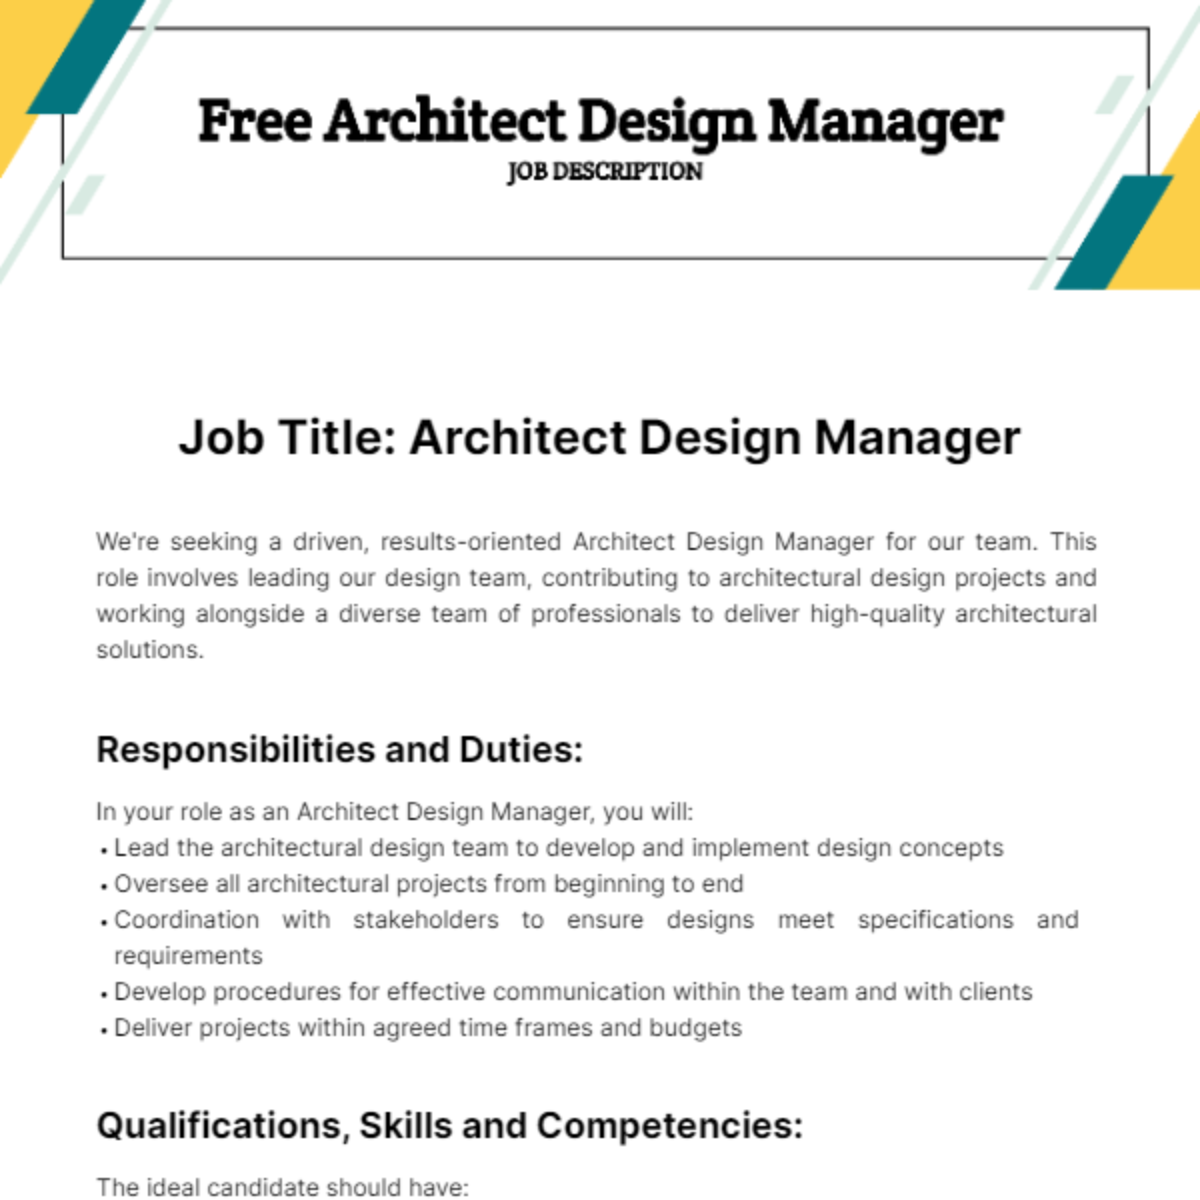 Free Architect Design Manager job Description Template